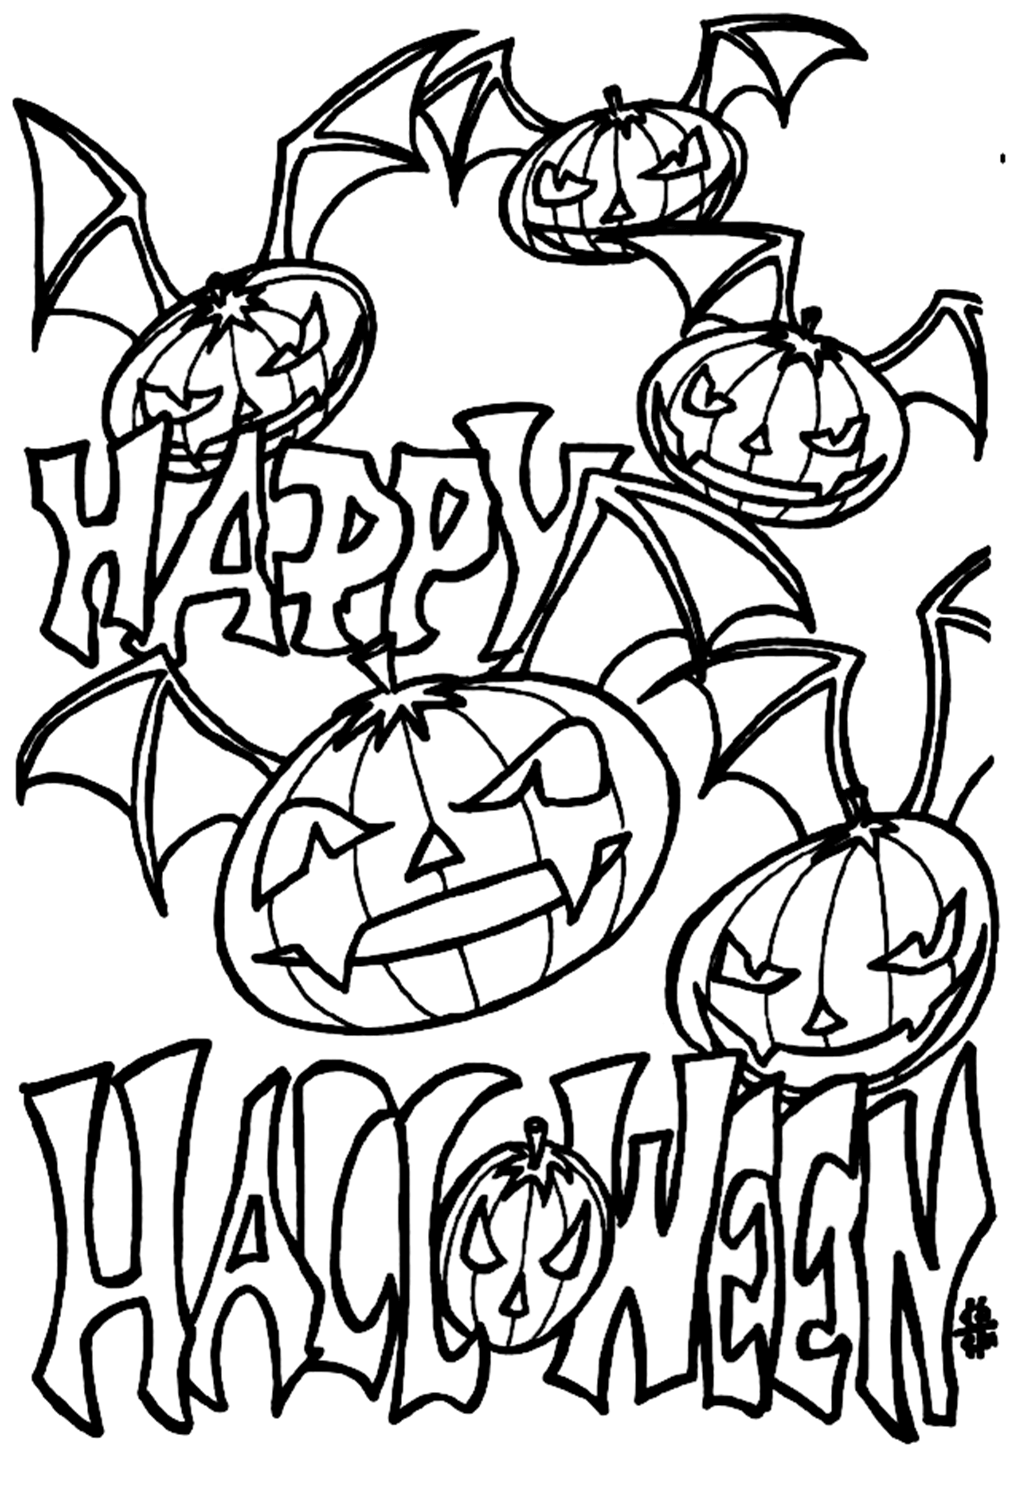 Happy Halloween Pumpkin Coloring Page Coloring Page